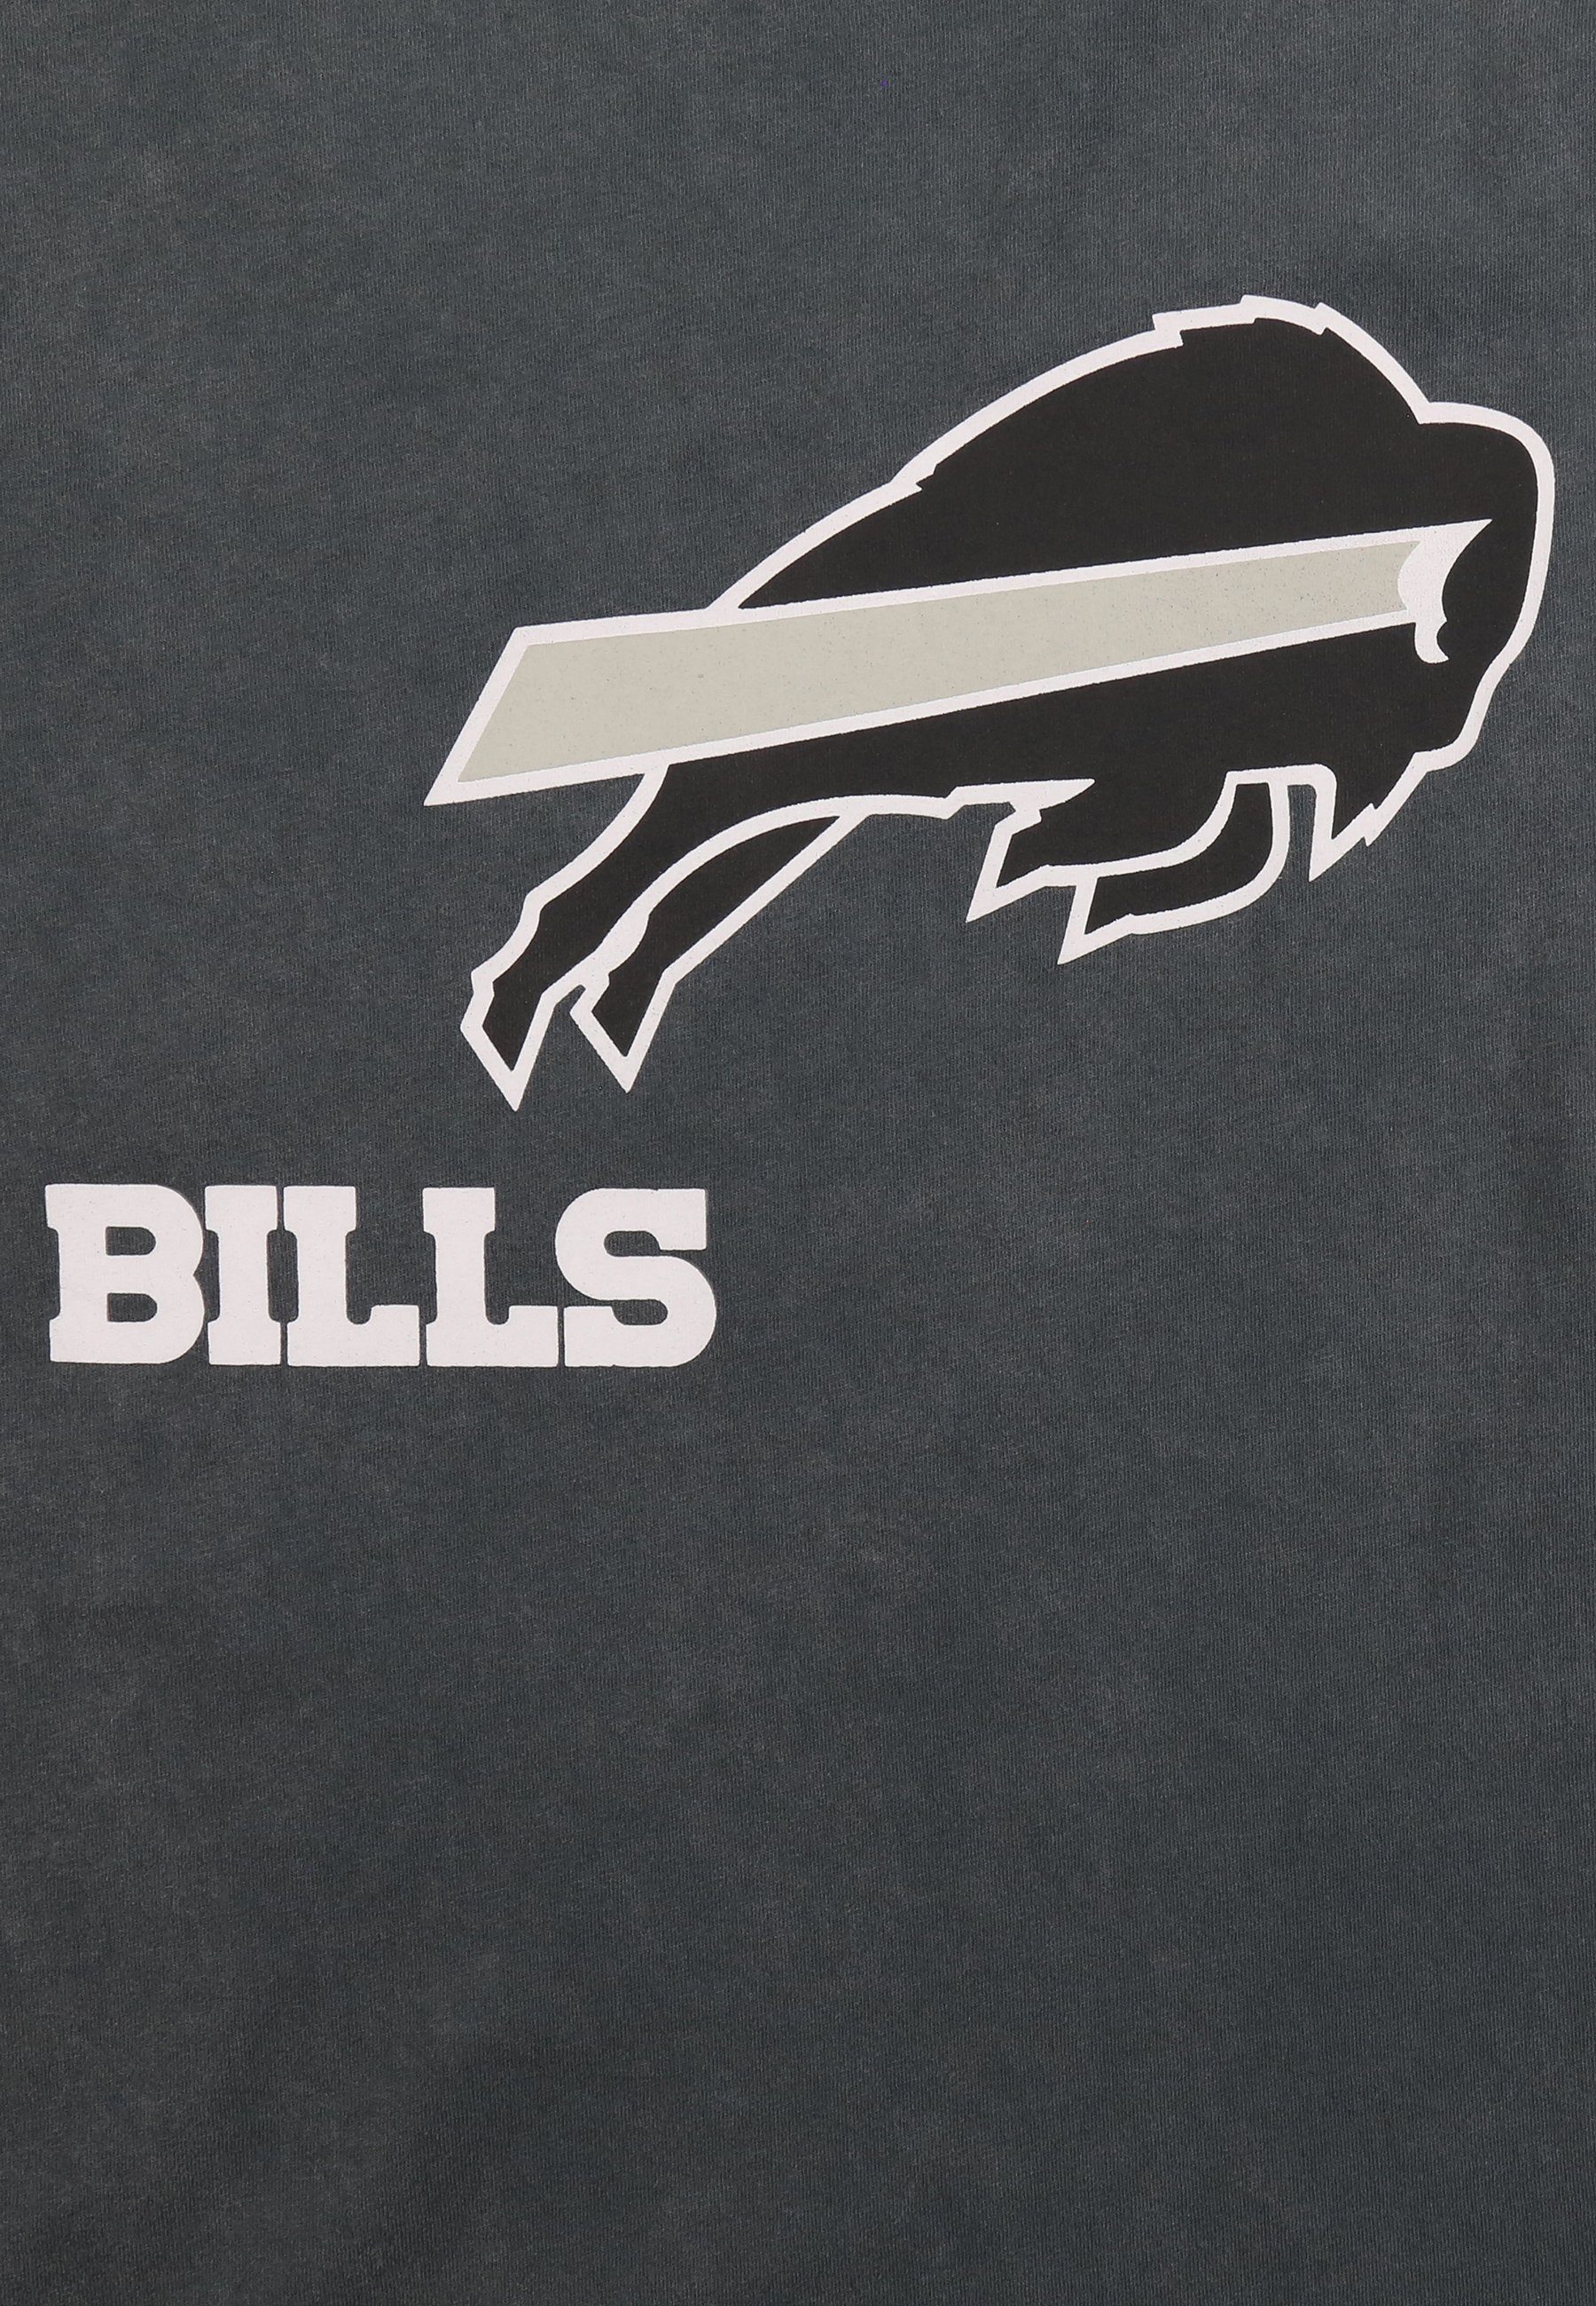 NFL zertifizierte Bio-Baumwolle MONOCHROME T-Shirt GOTS Recovered BILLS